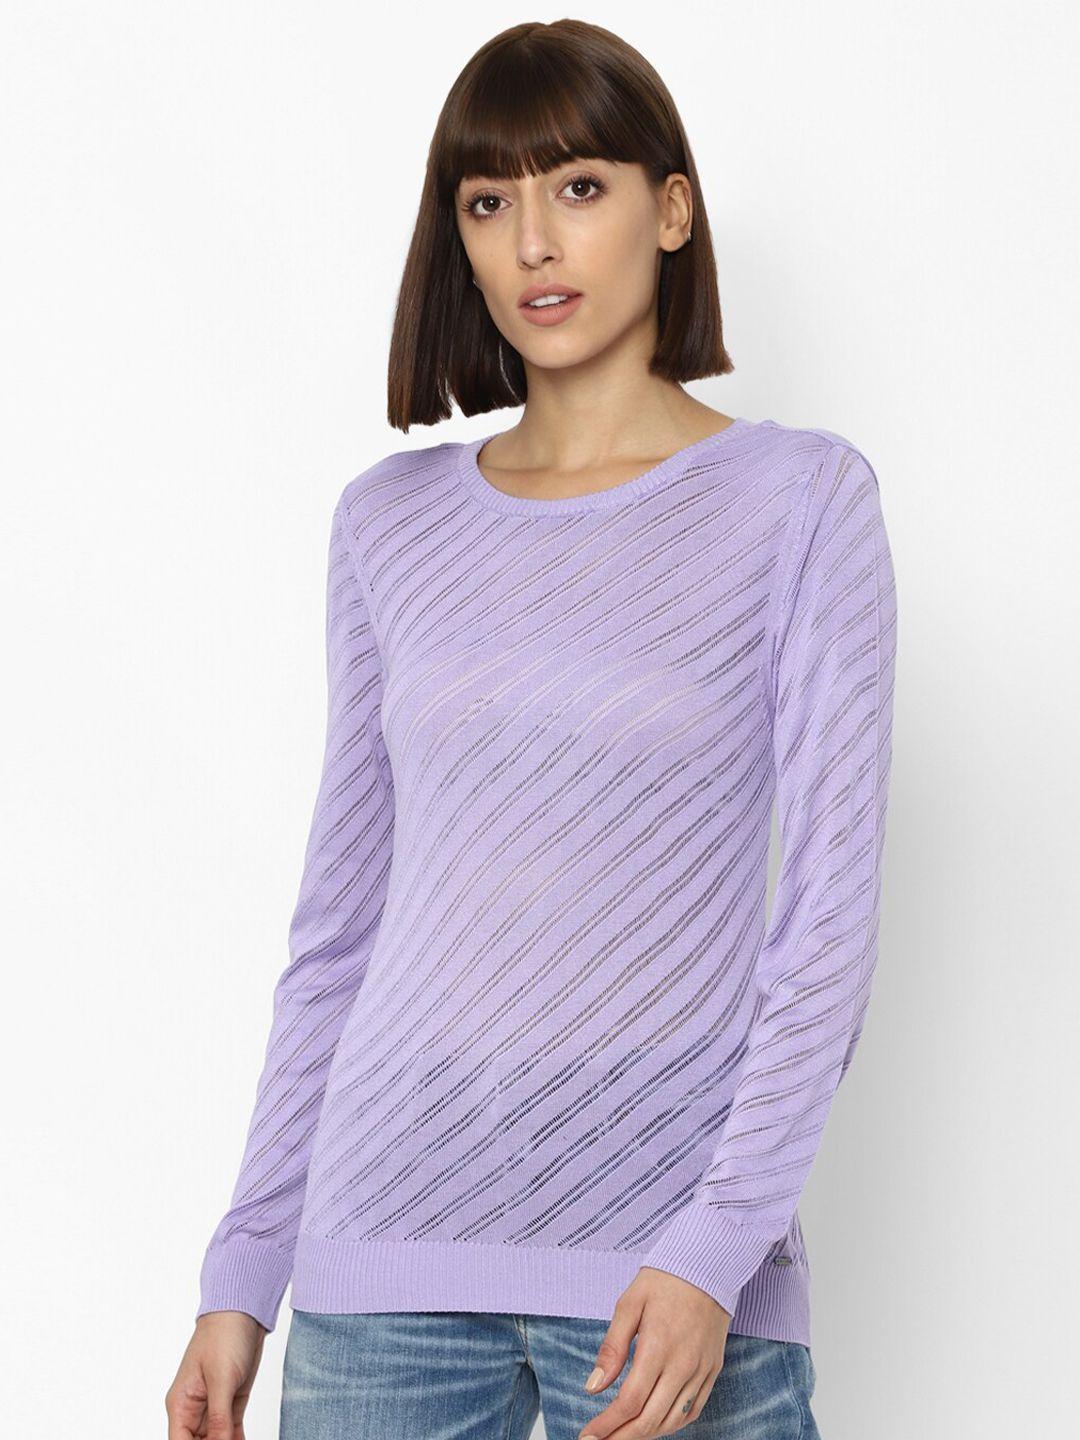 allen-solly-woman-purple-knitted-regular-top